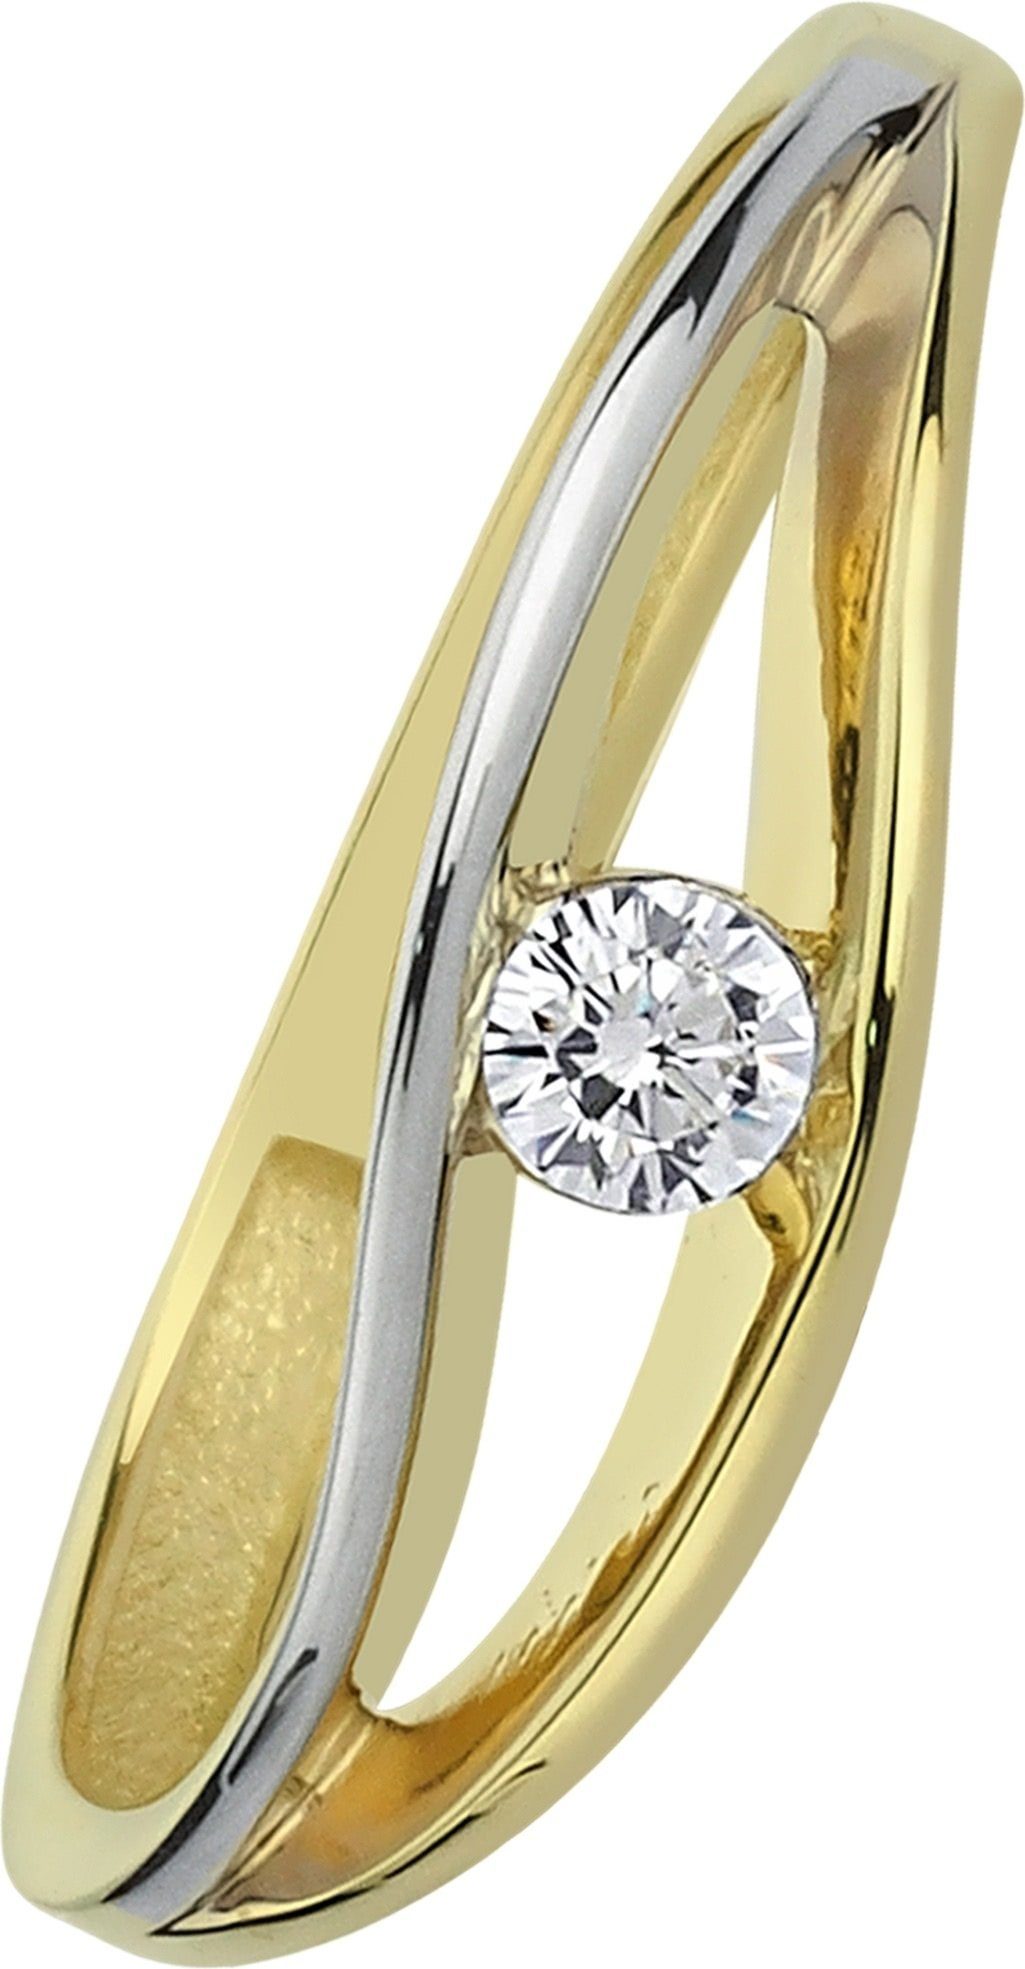 Balia Goldring Balia Damen Ring Gelbgold 8Karat Gr.56 (Fingerring), Damen Ring geschwungen aus 333 Gelbgold - 8 Karat, Farbe: weiß, gold